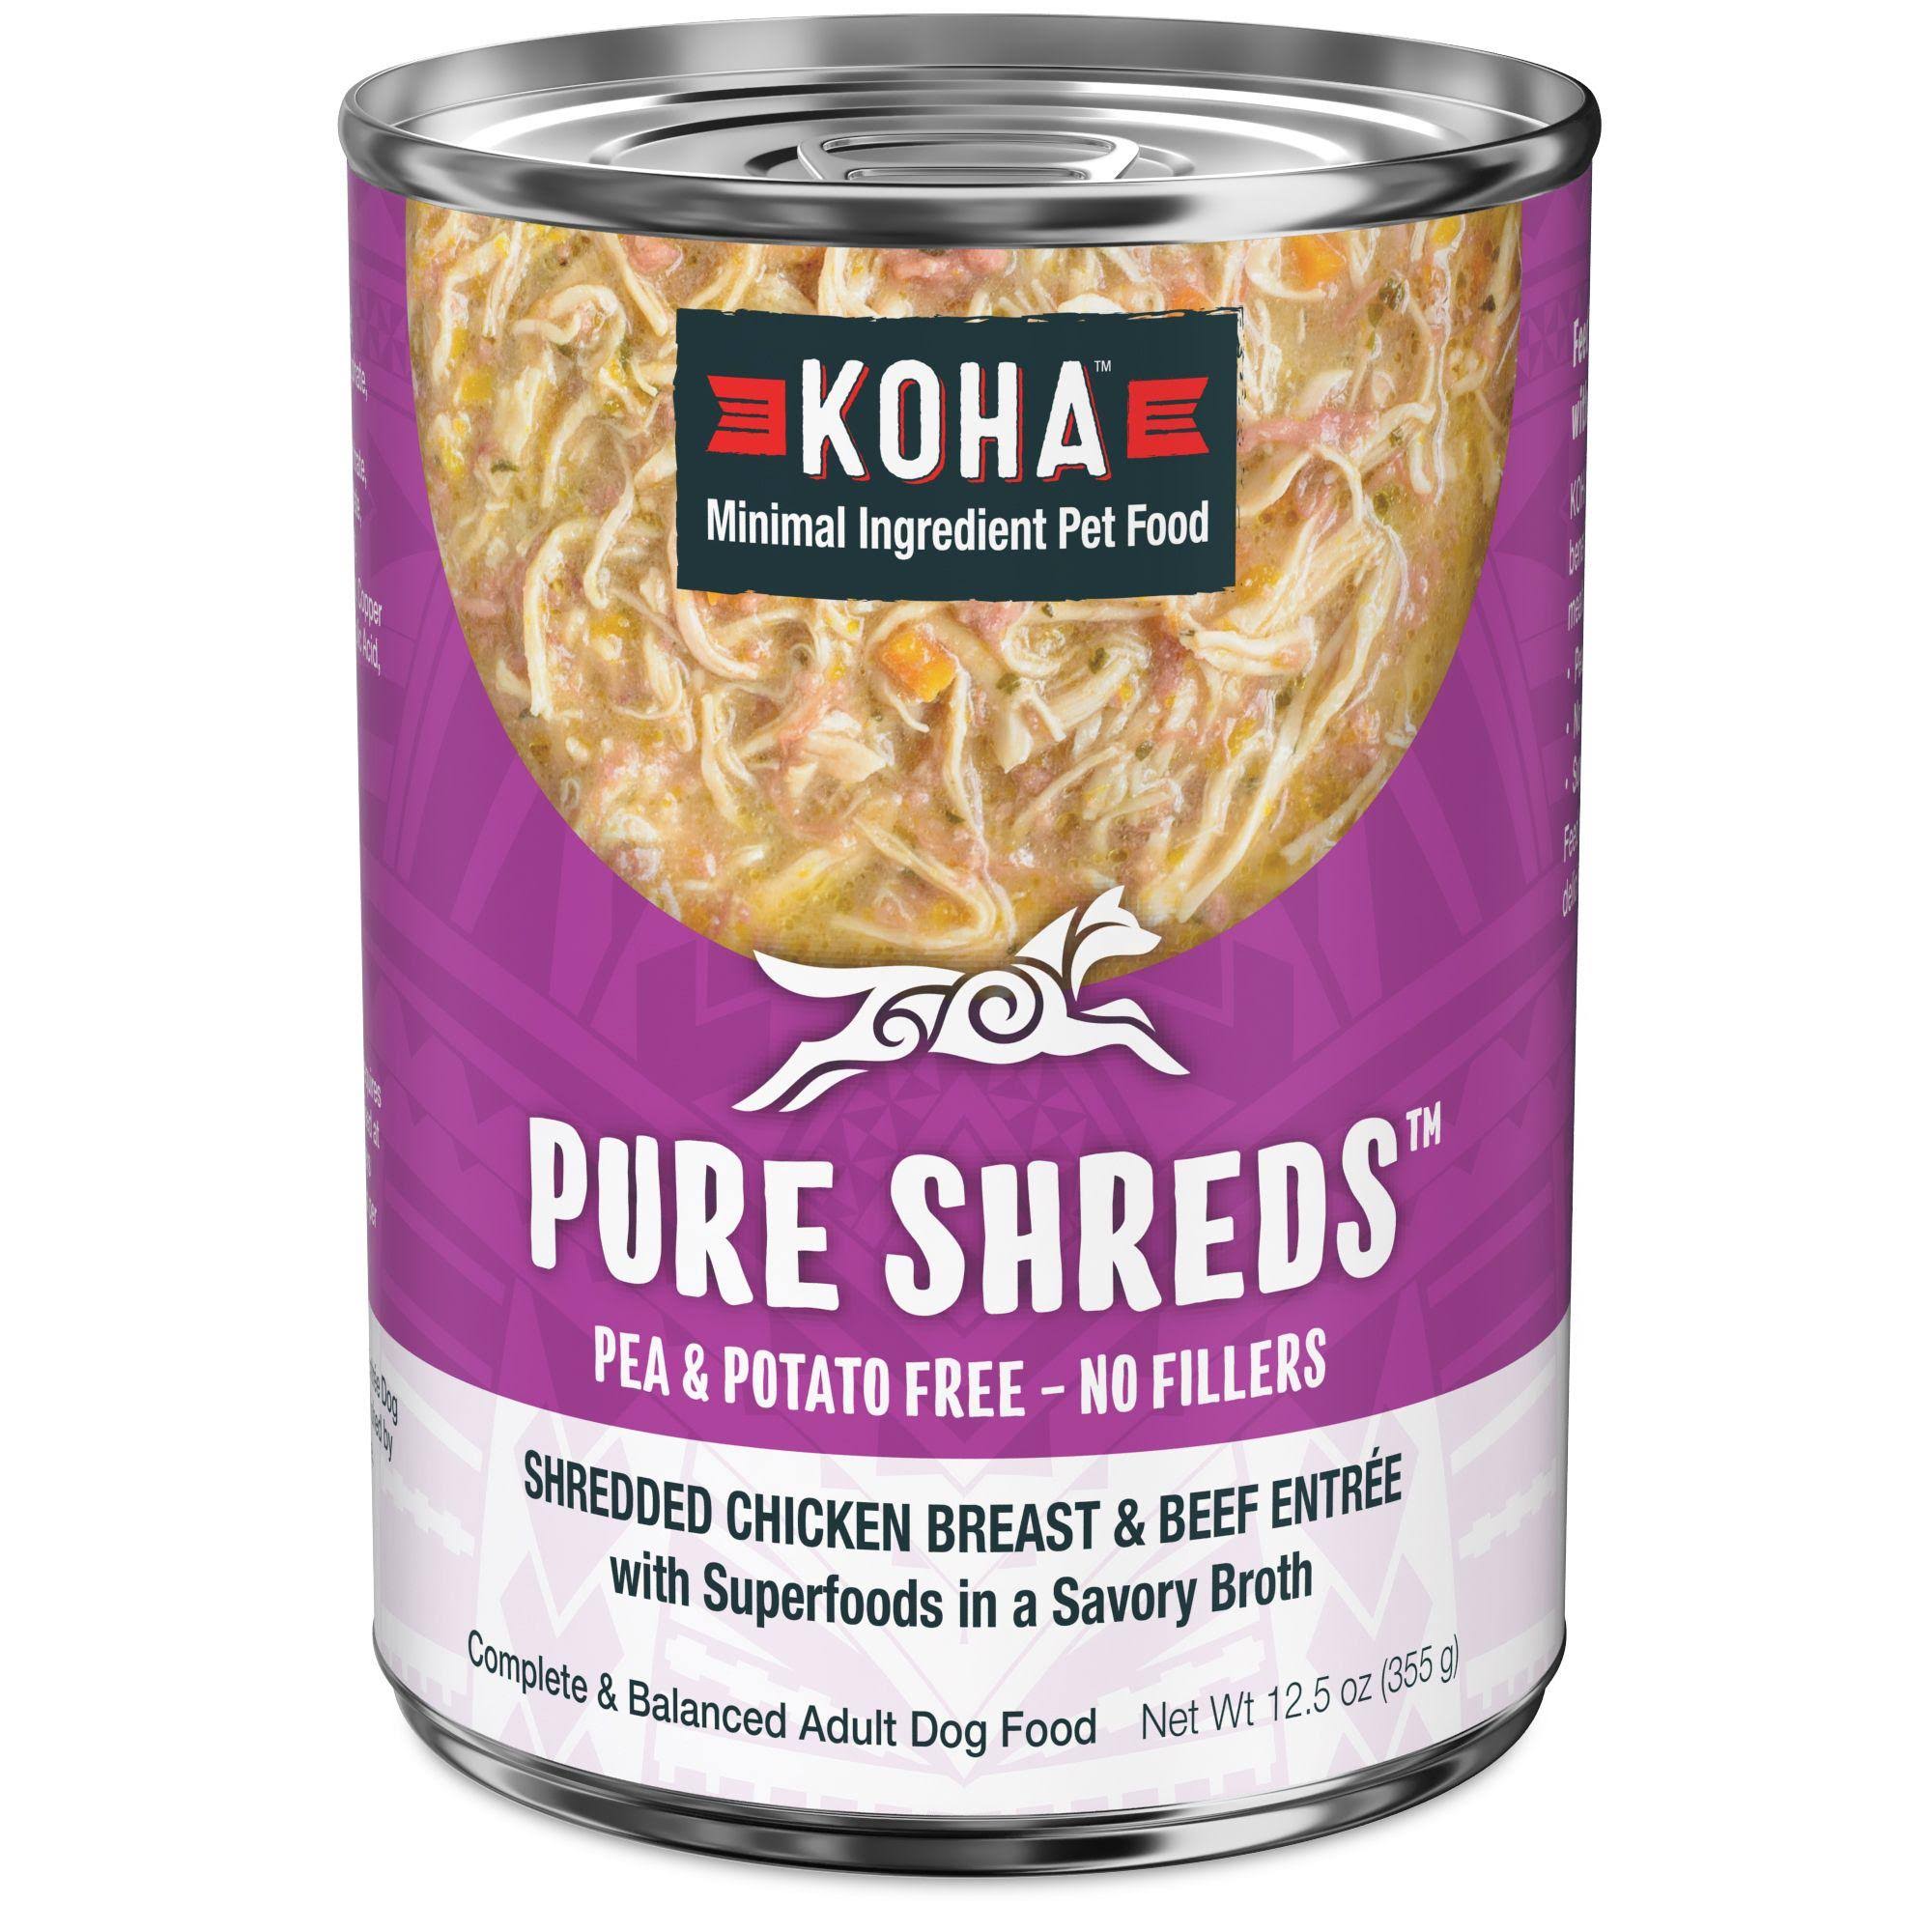 Koha Pure Shreds Shredded Chicken Breast & Beef Entree Dog Food